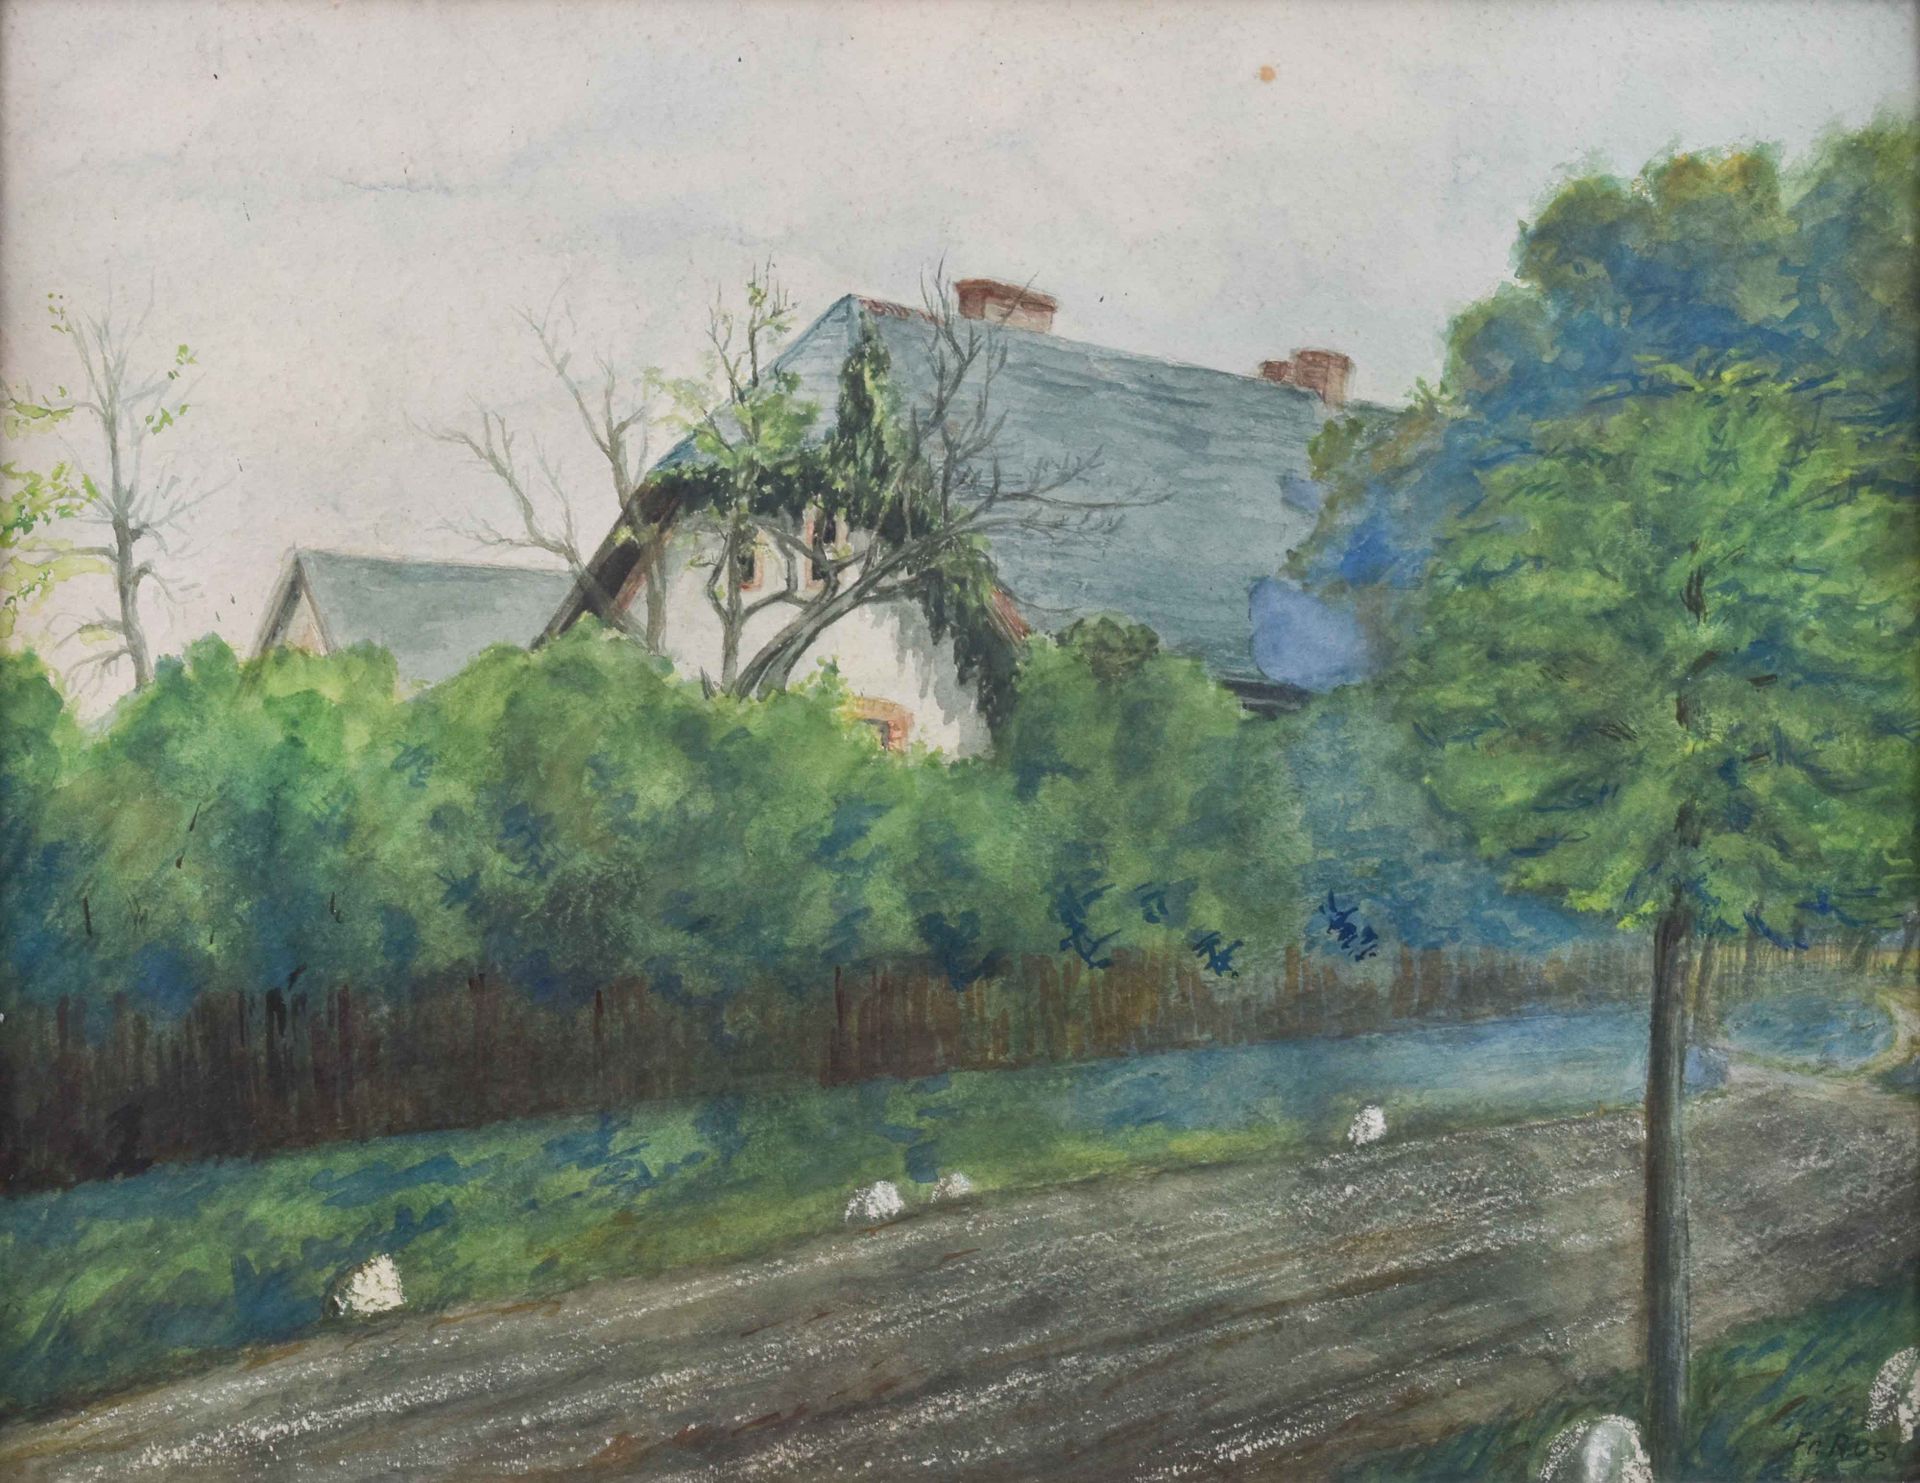 Null 
弗朗斯-罗斯(1883-1968)
"路边的房子

素描-水彩画，34厘米x44厘米。

右下方有签名